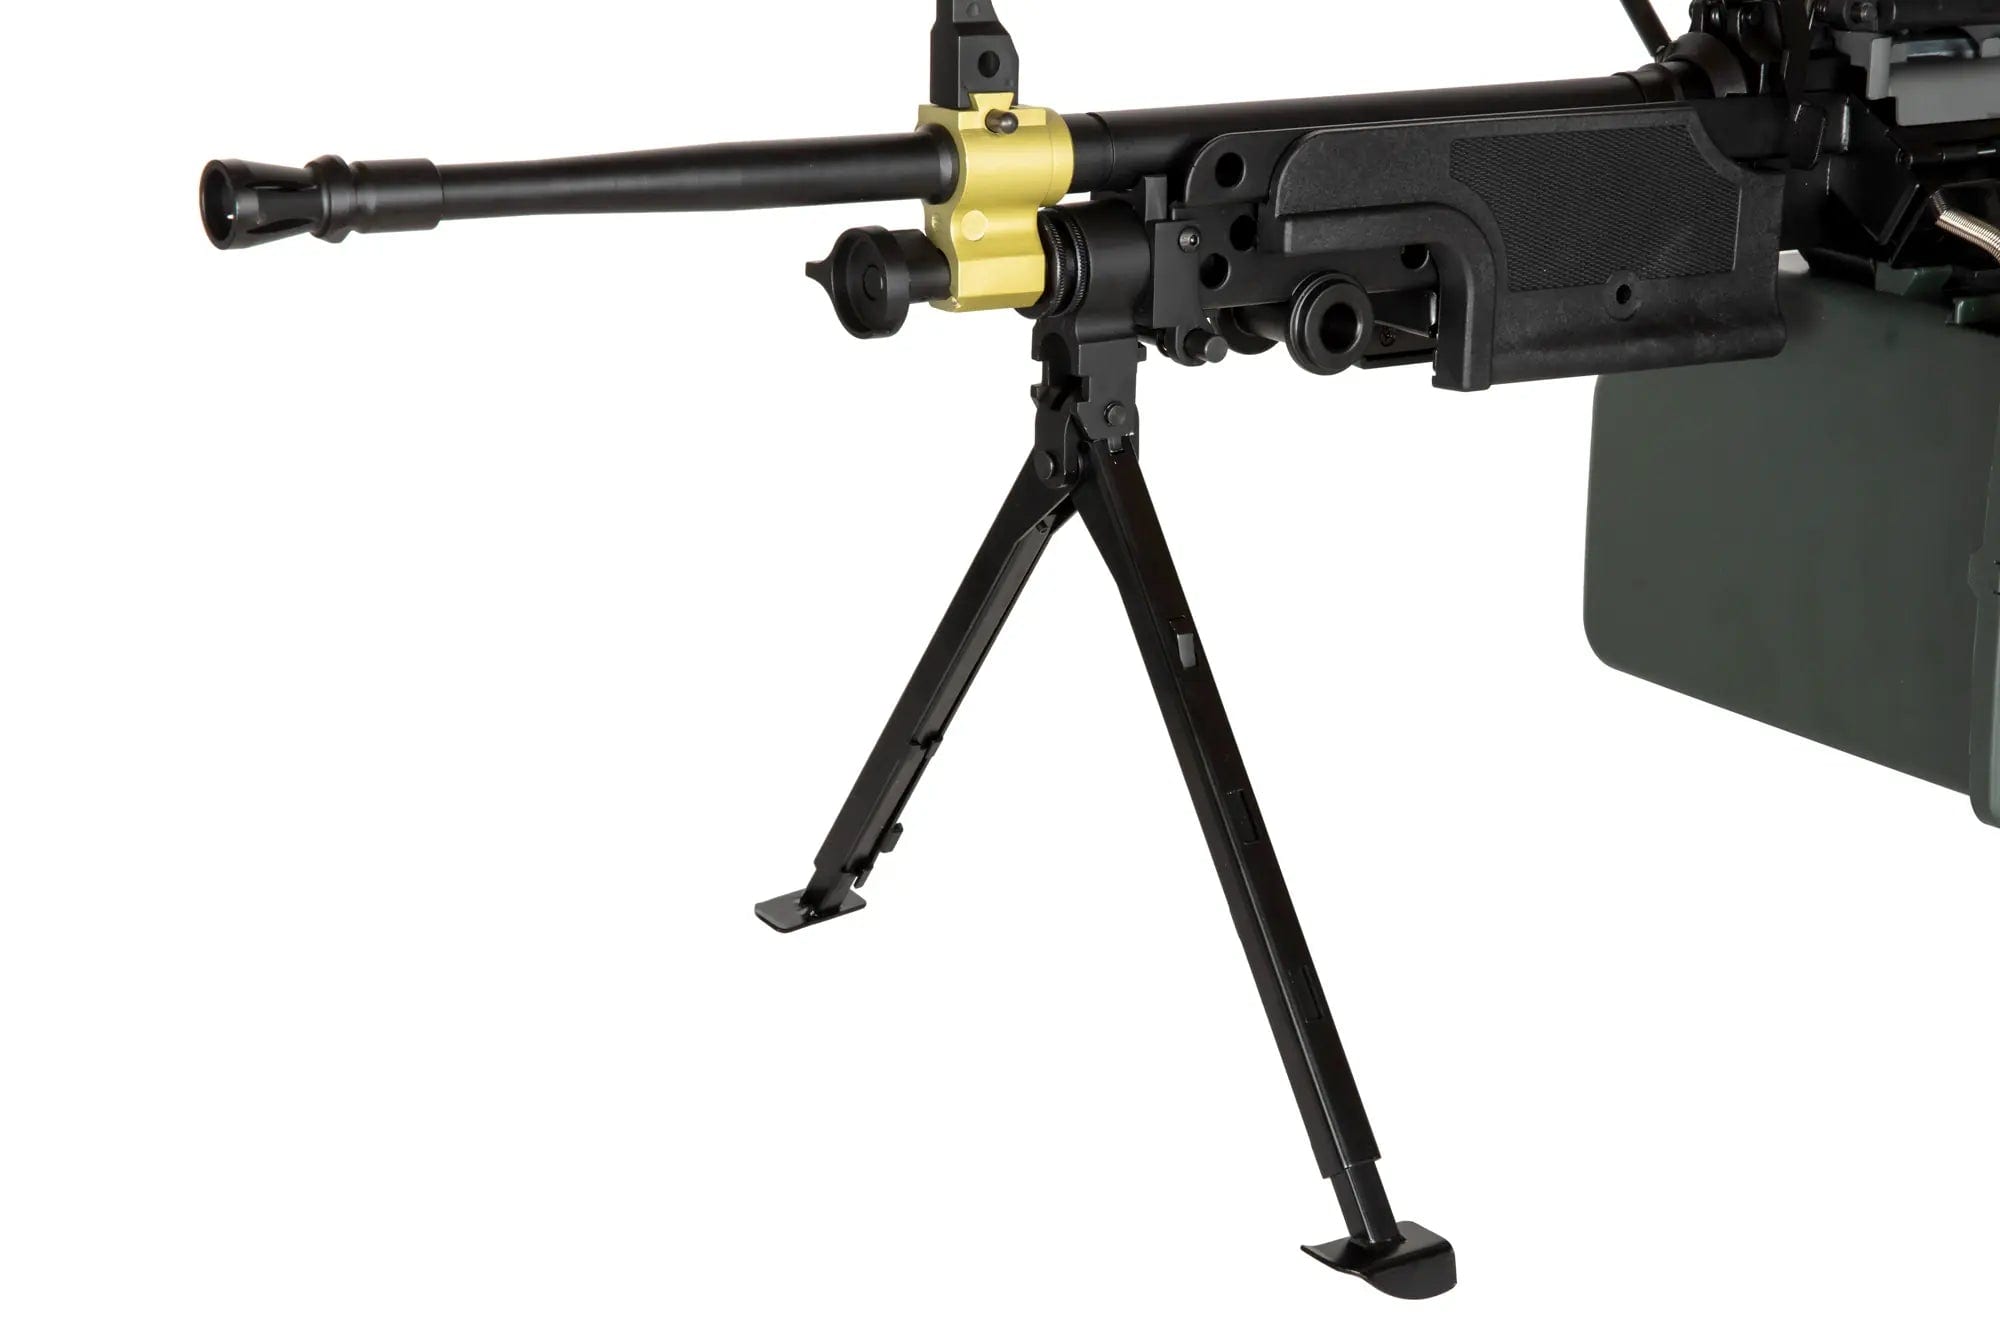 Machine Gun SA-249 MK1 EDGE - Black